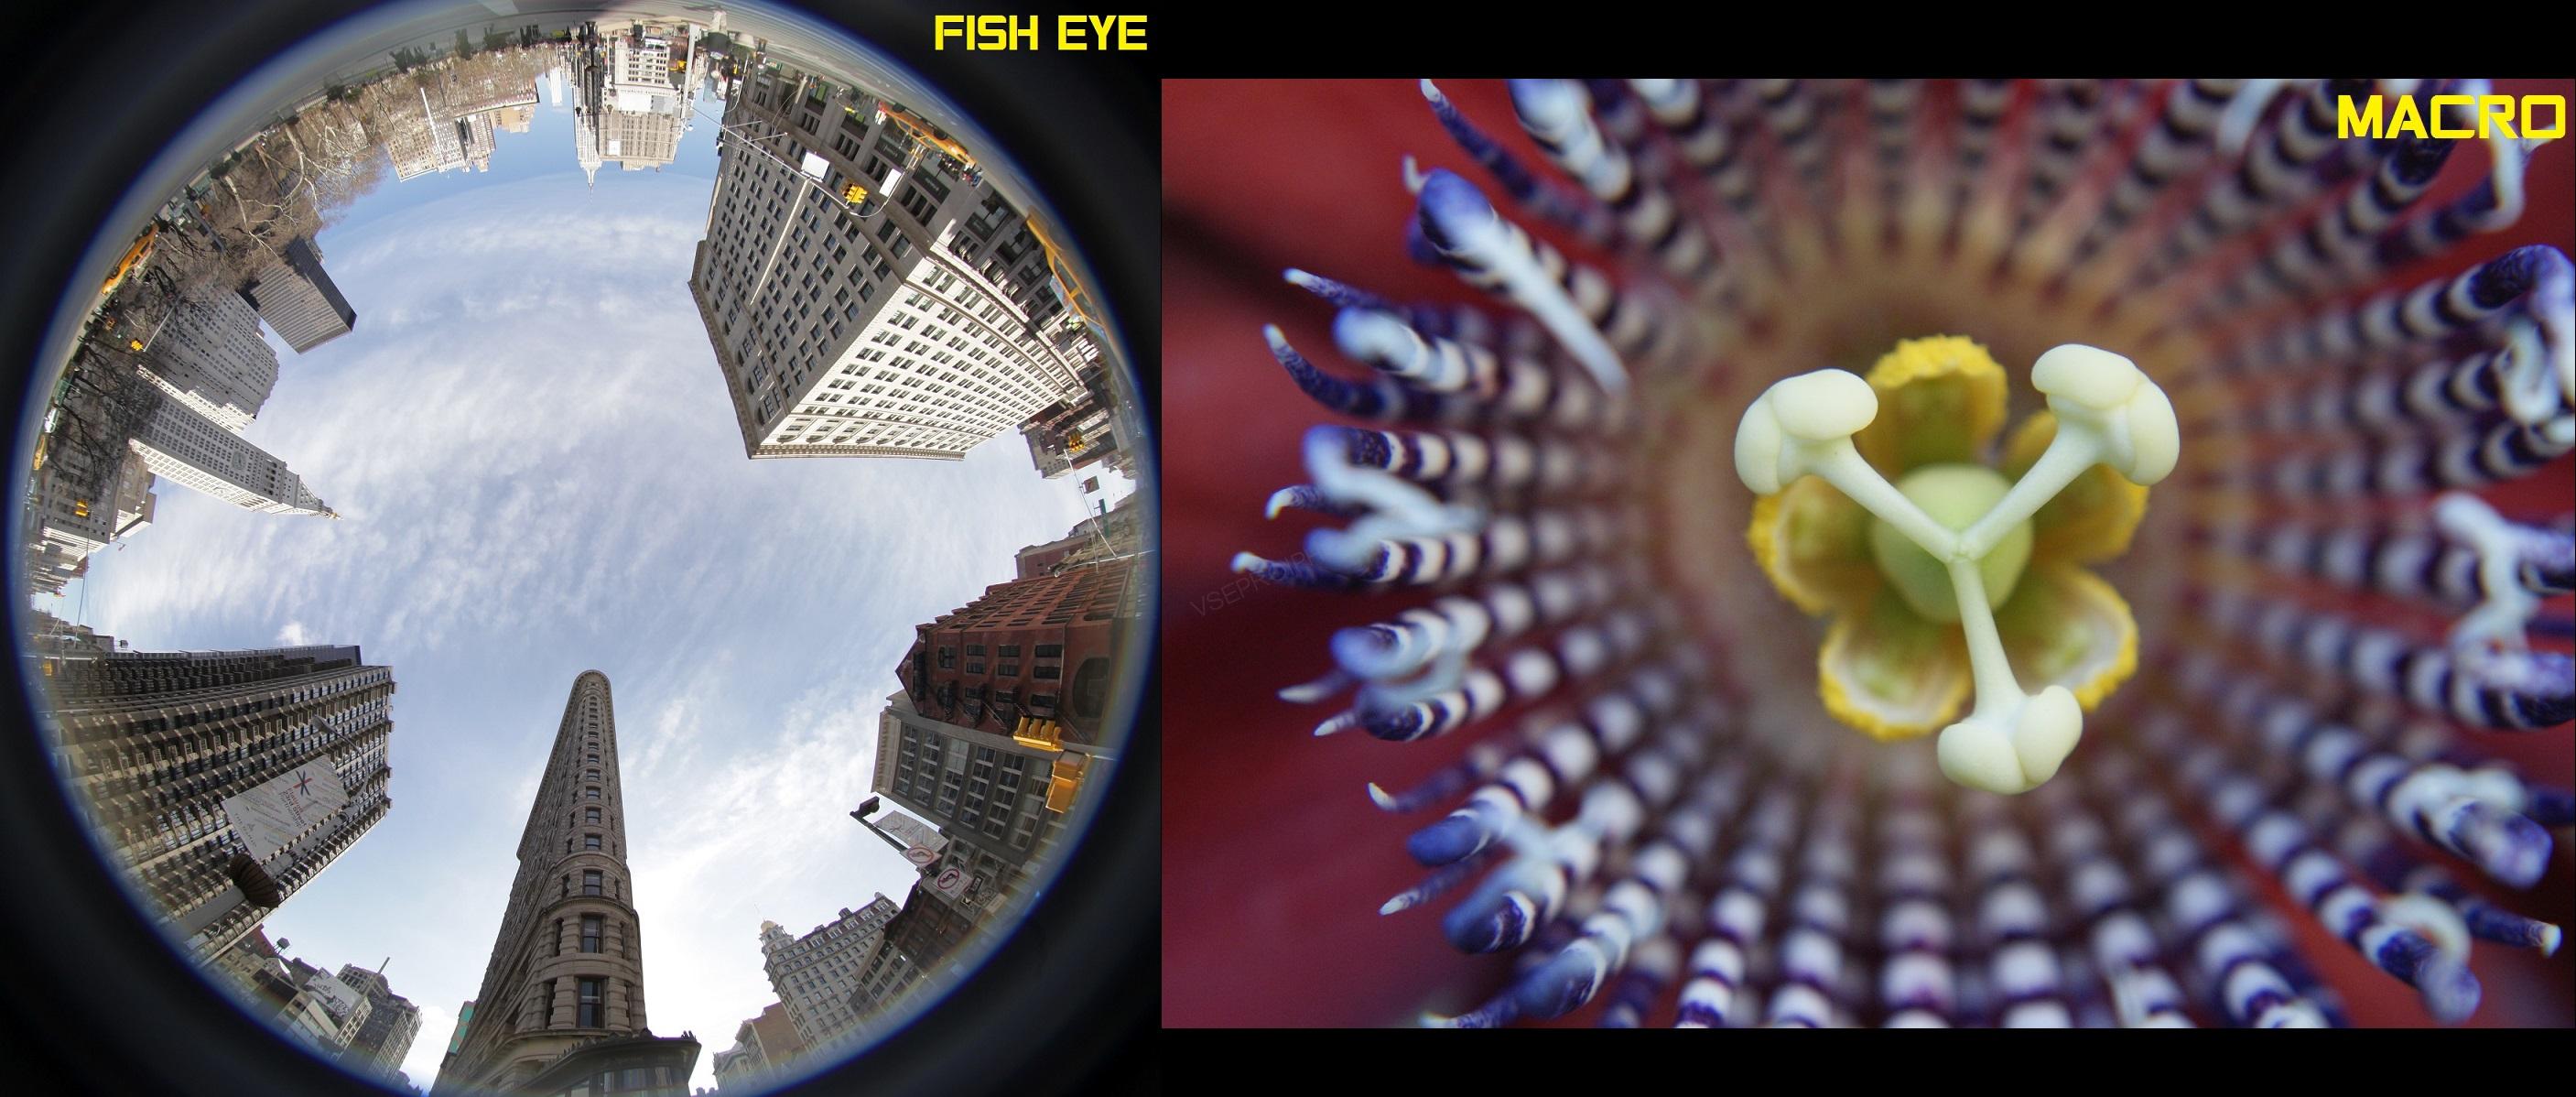 universal clip fish eye a macro